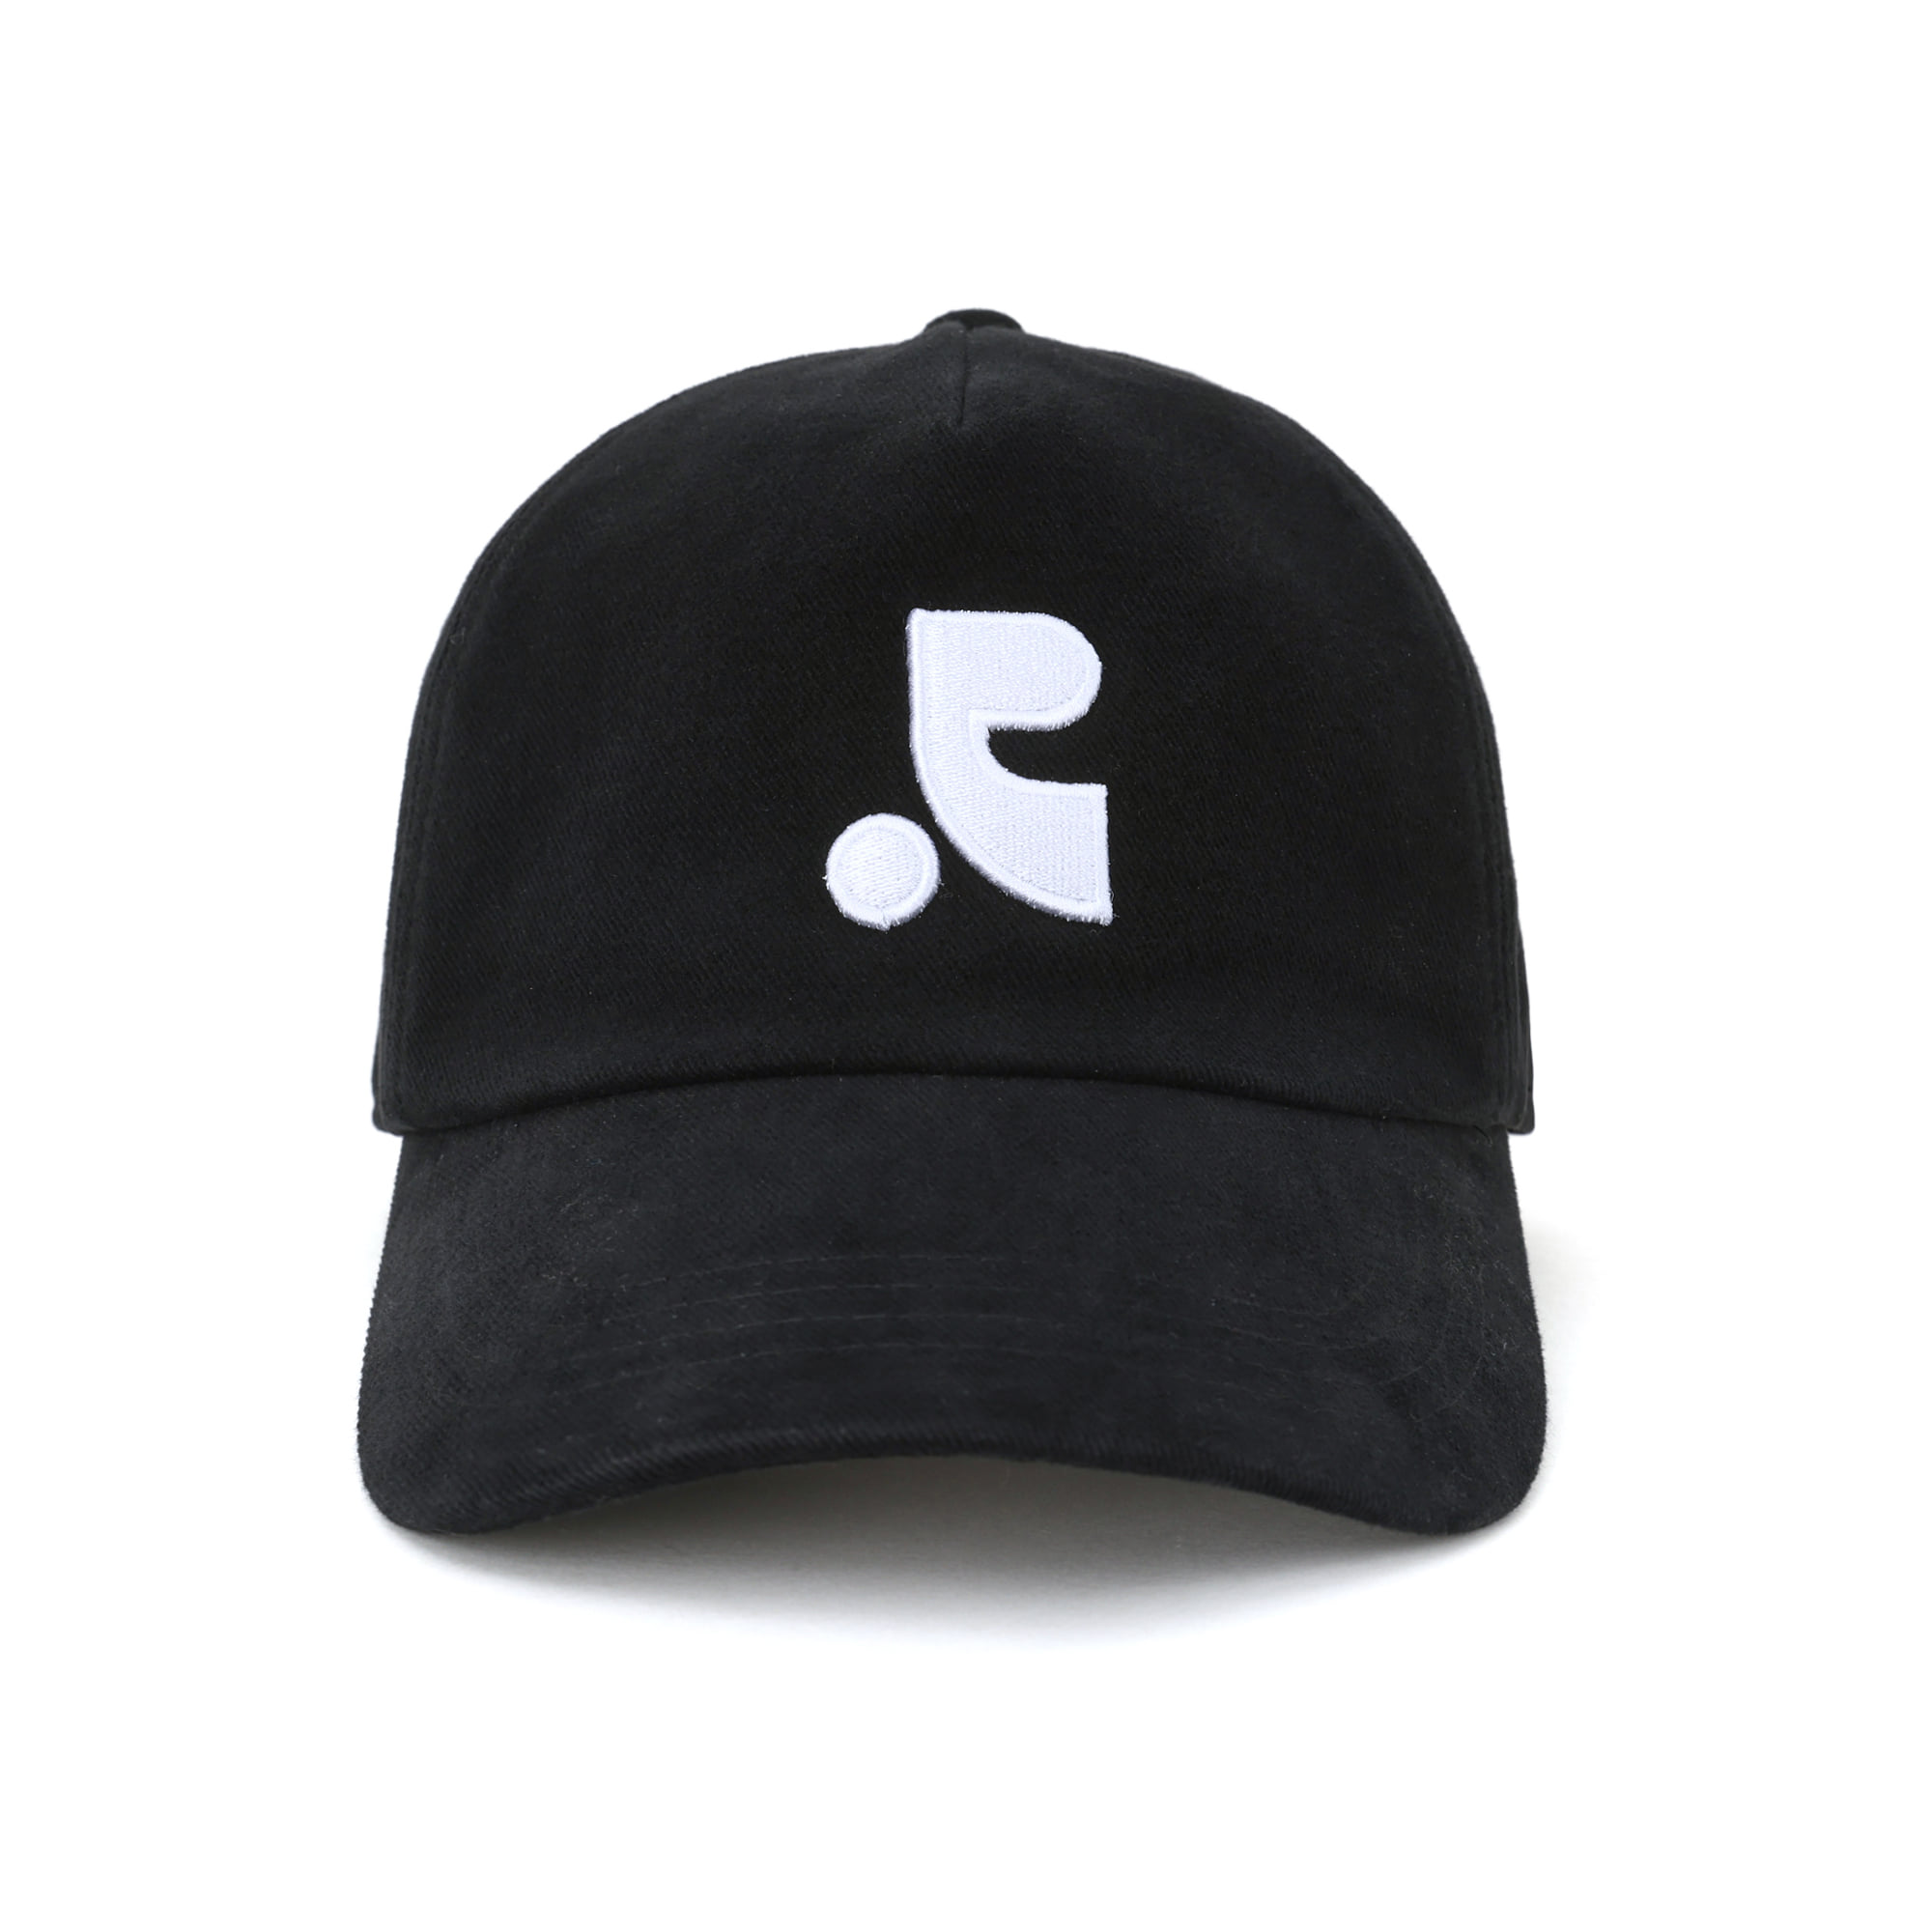 RR LOGO BALL CAP - BLACK